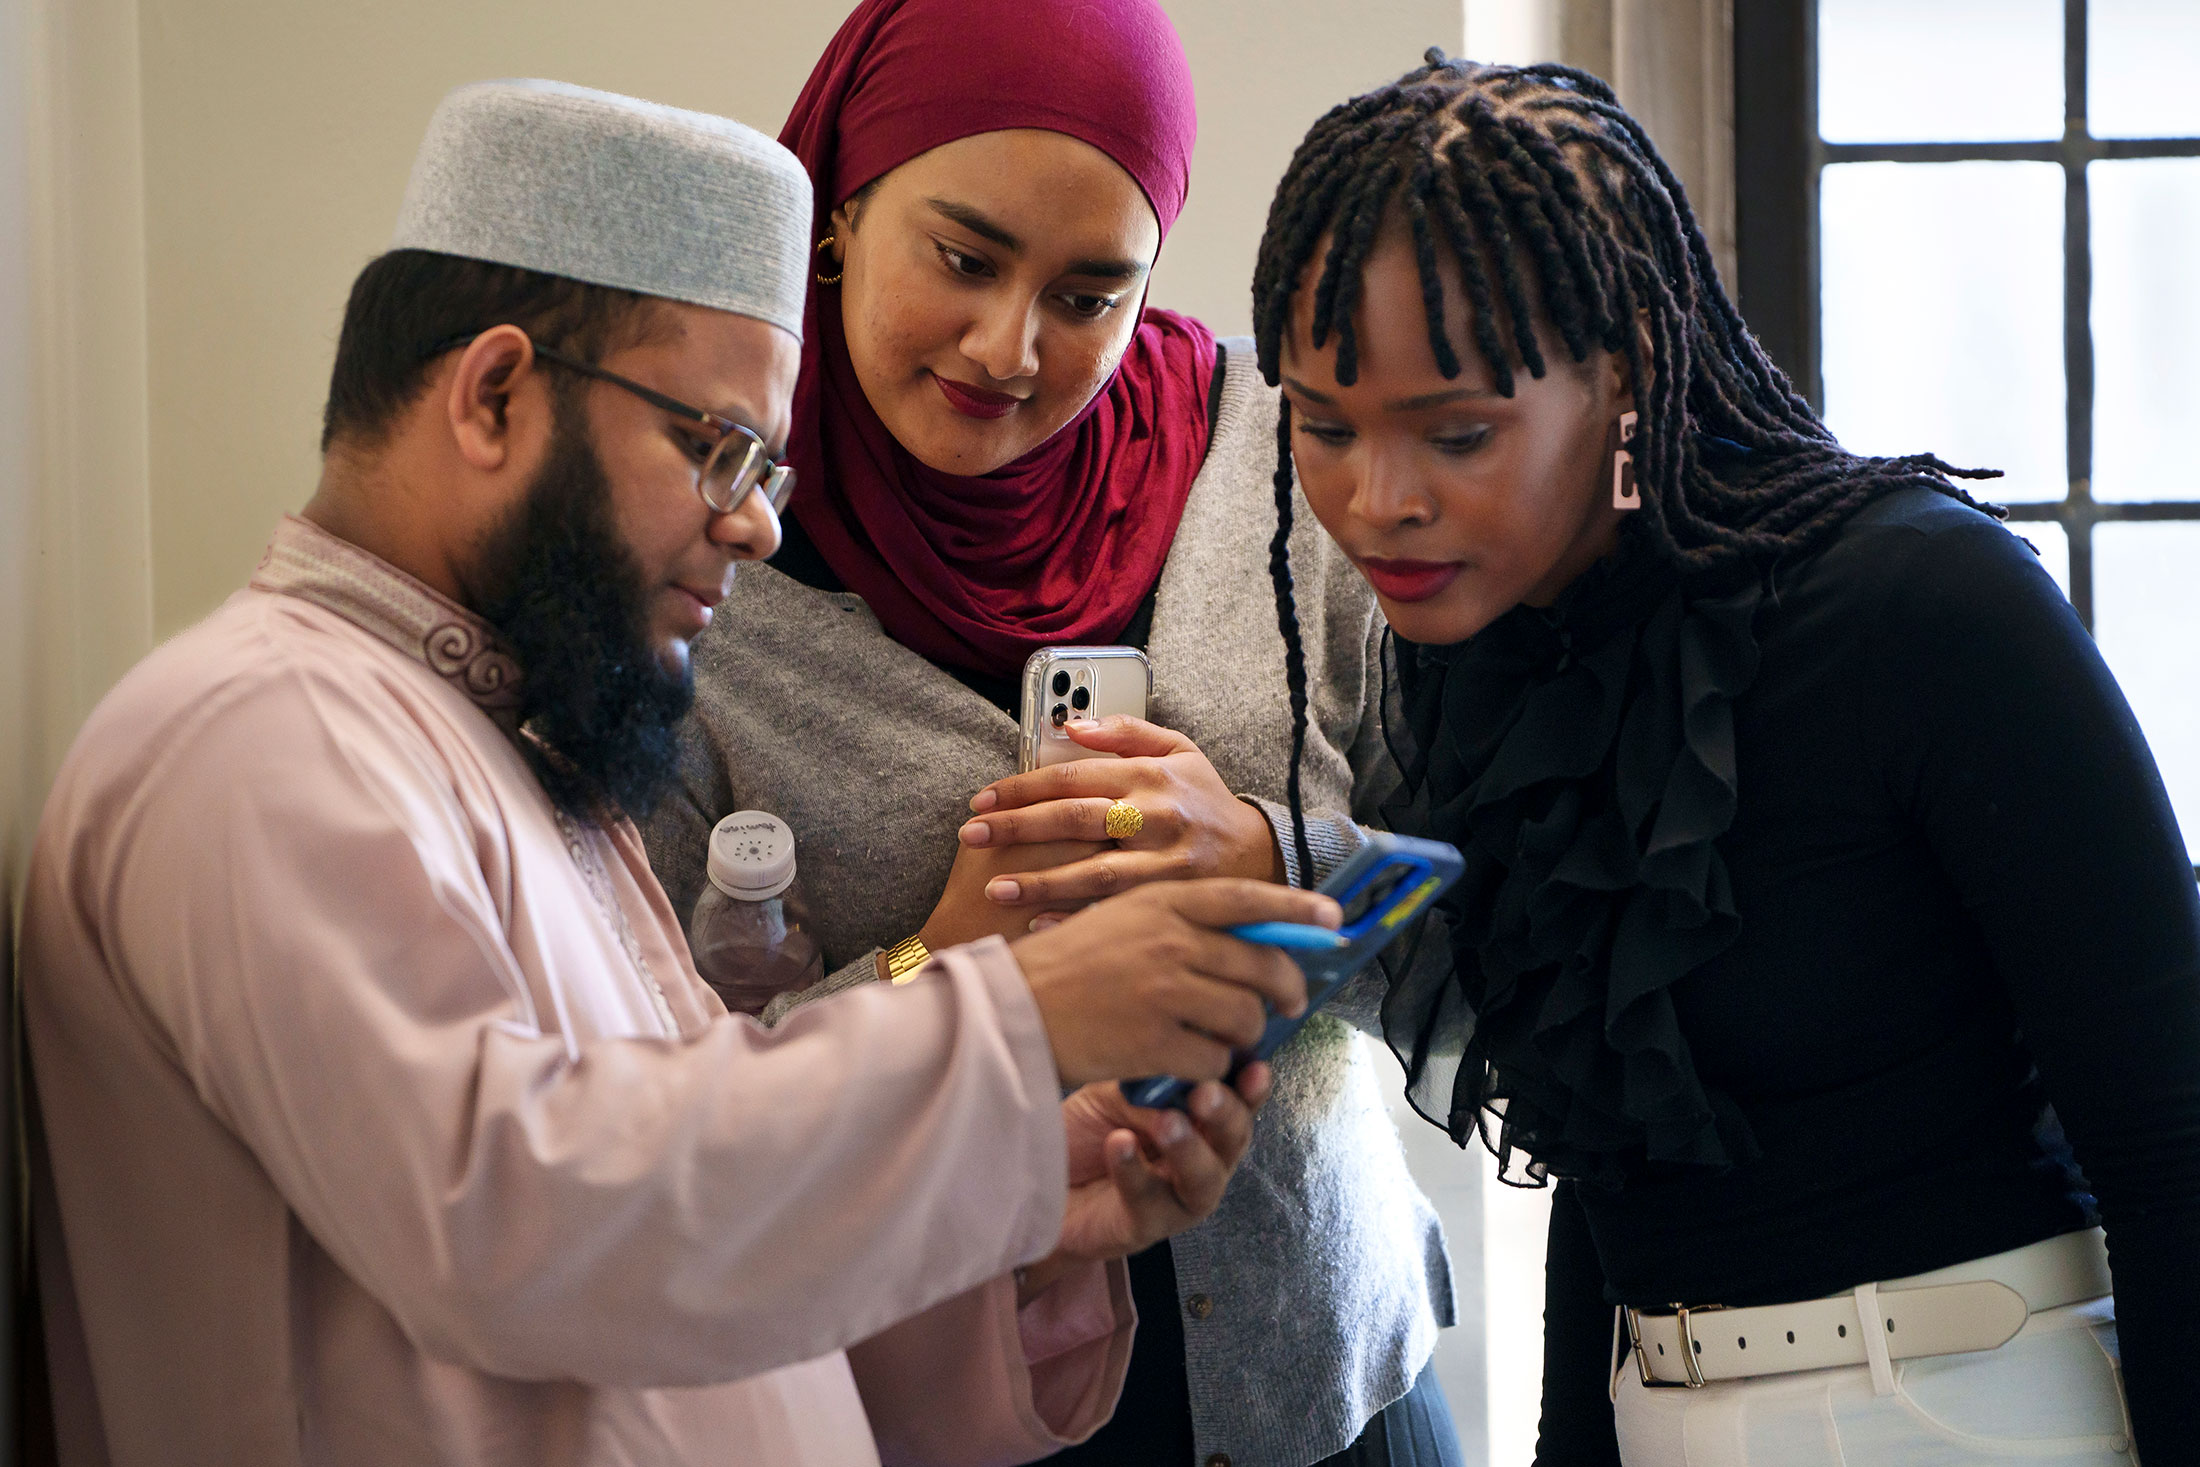 Muhammad Mohsin from the University of Dhaka, Bangladesh shows fellows Tamina Rauf and Andile Mnguni his phone.
